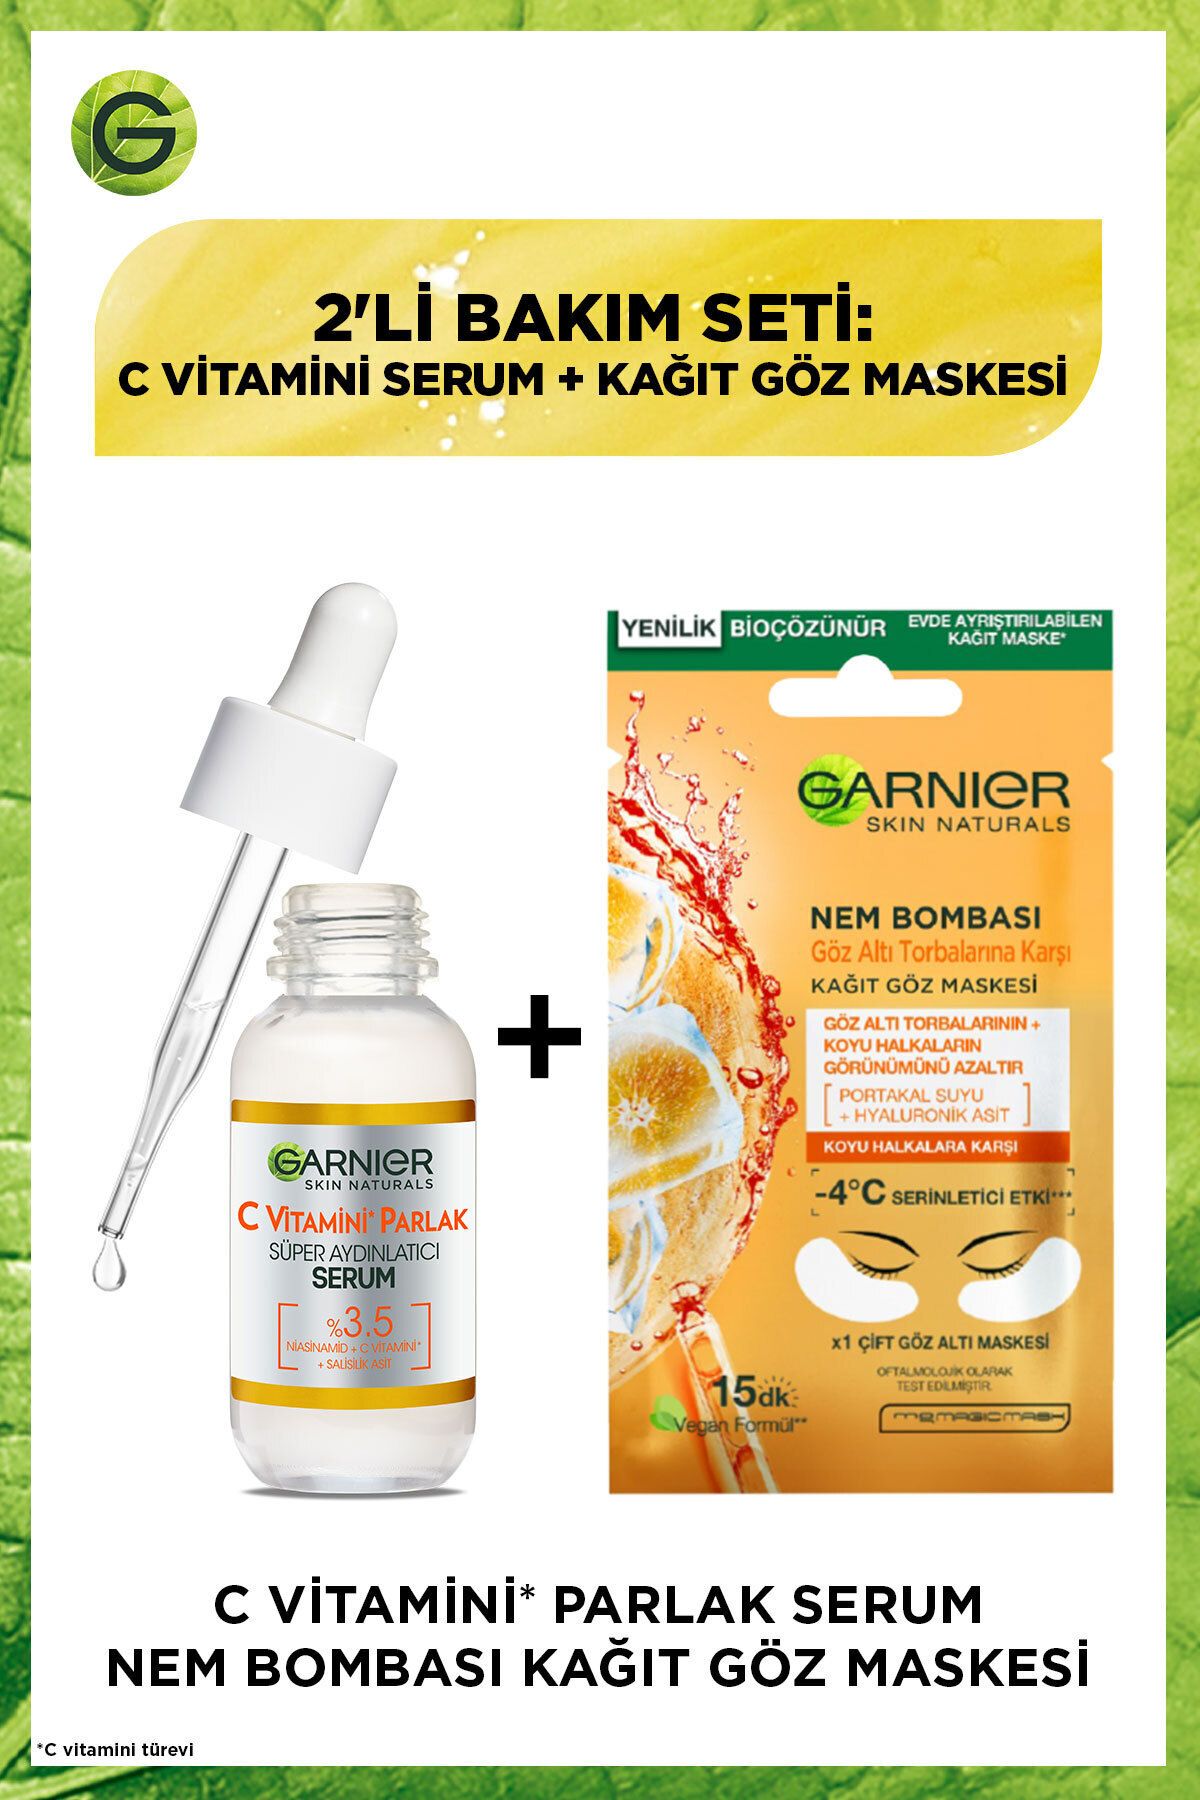 Garnier سرم روشن‌کننده فوق العاده ویتامین C 30 میلی‌لیتر همراه با ماسک چشم کاغذی برای کاهش تحت چشمی